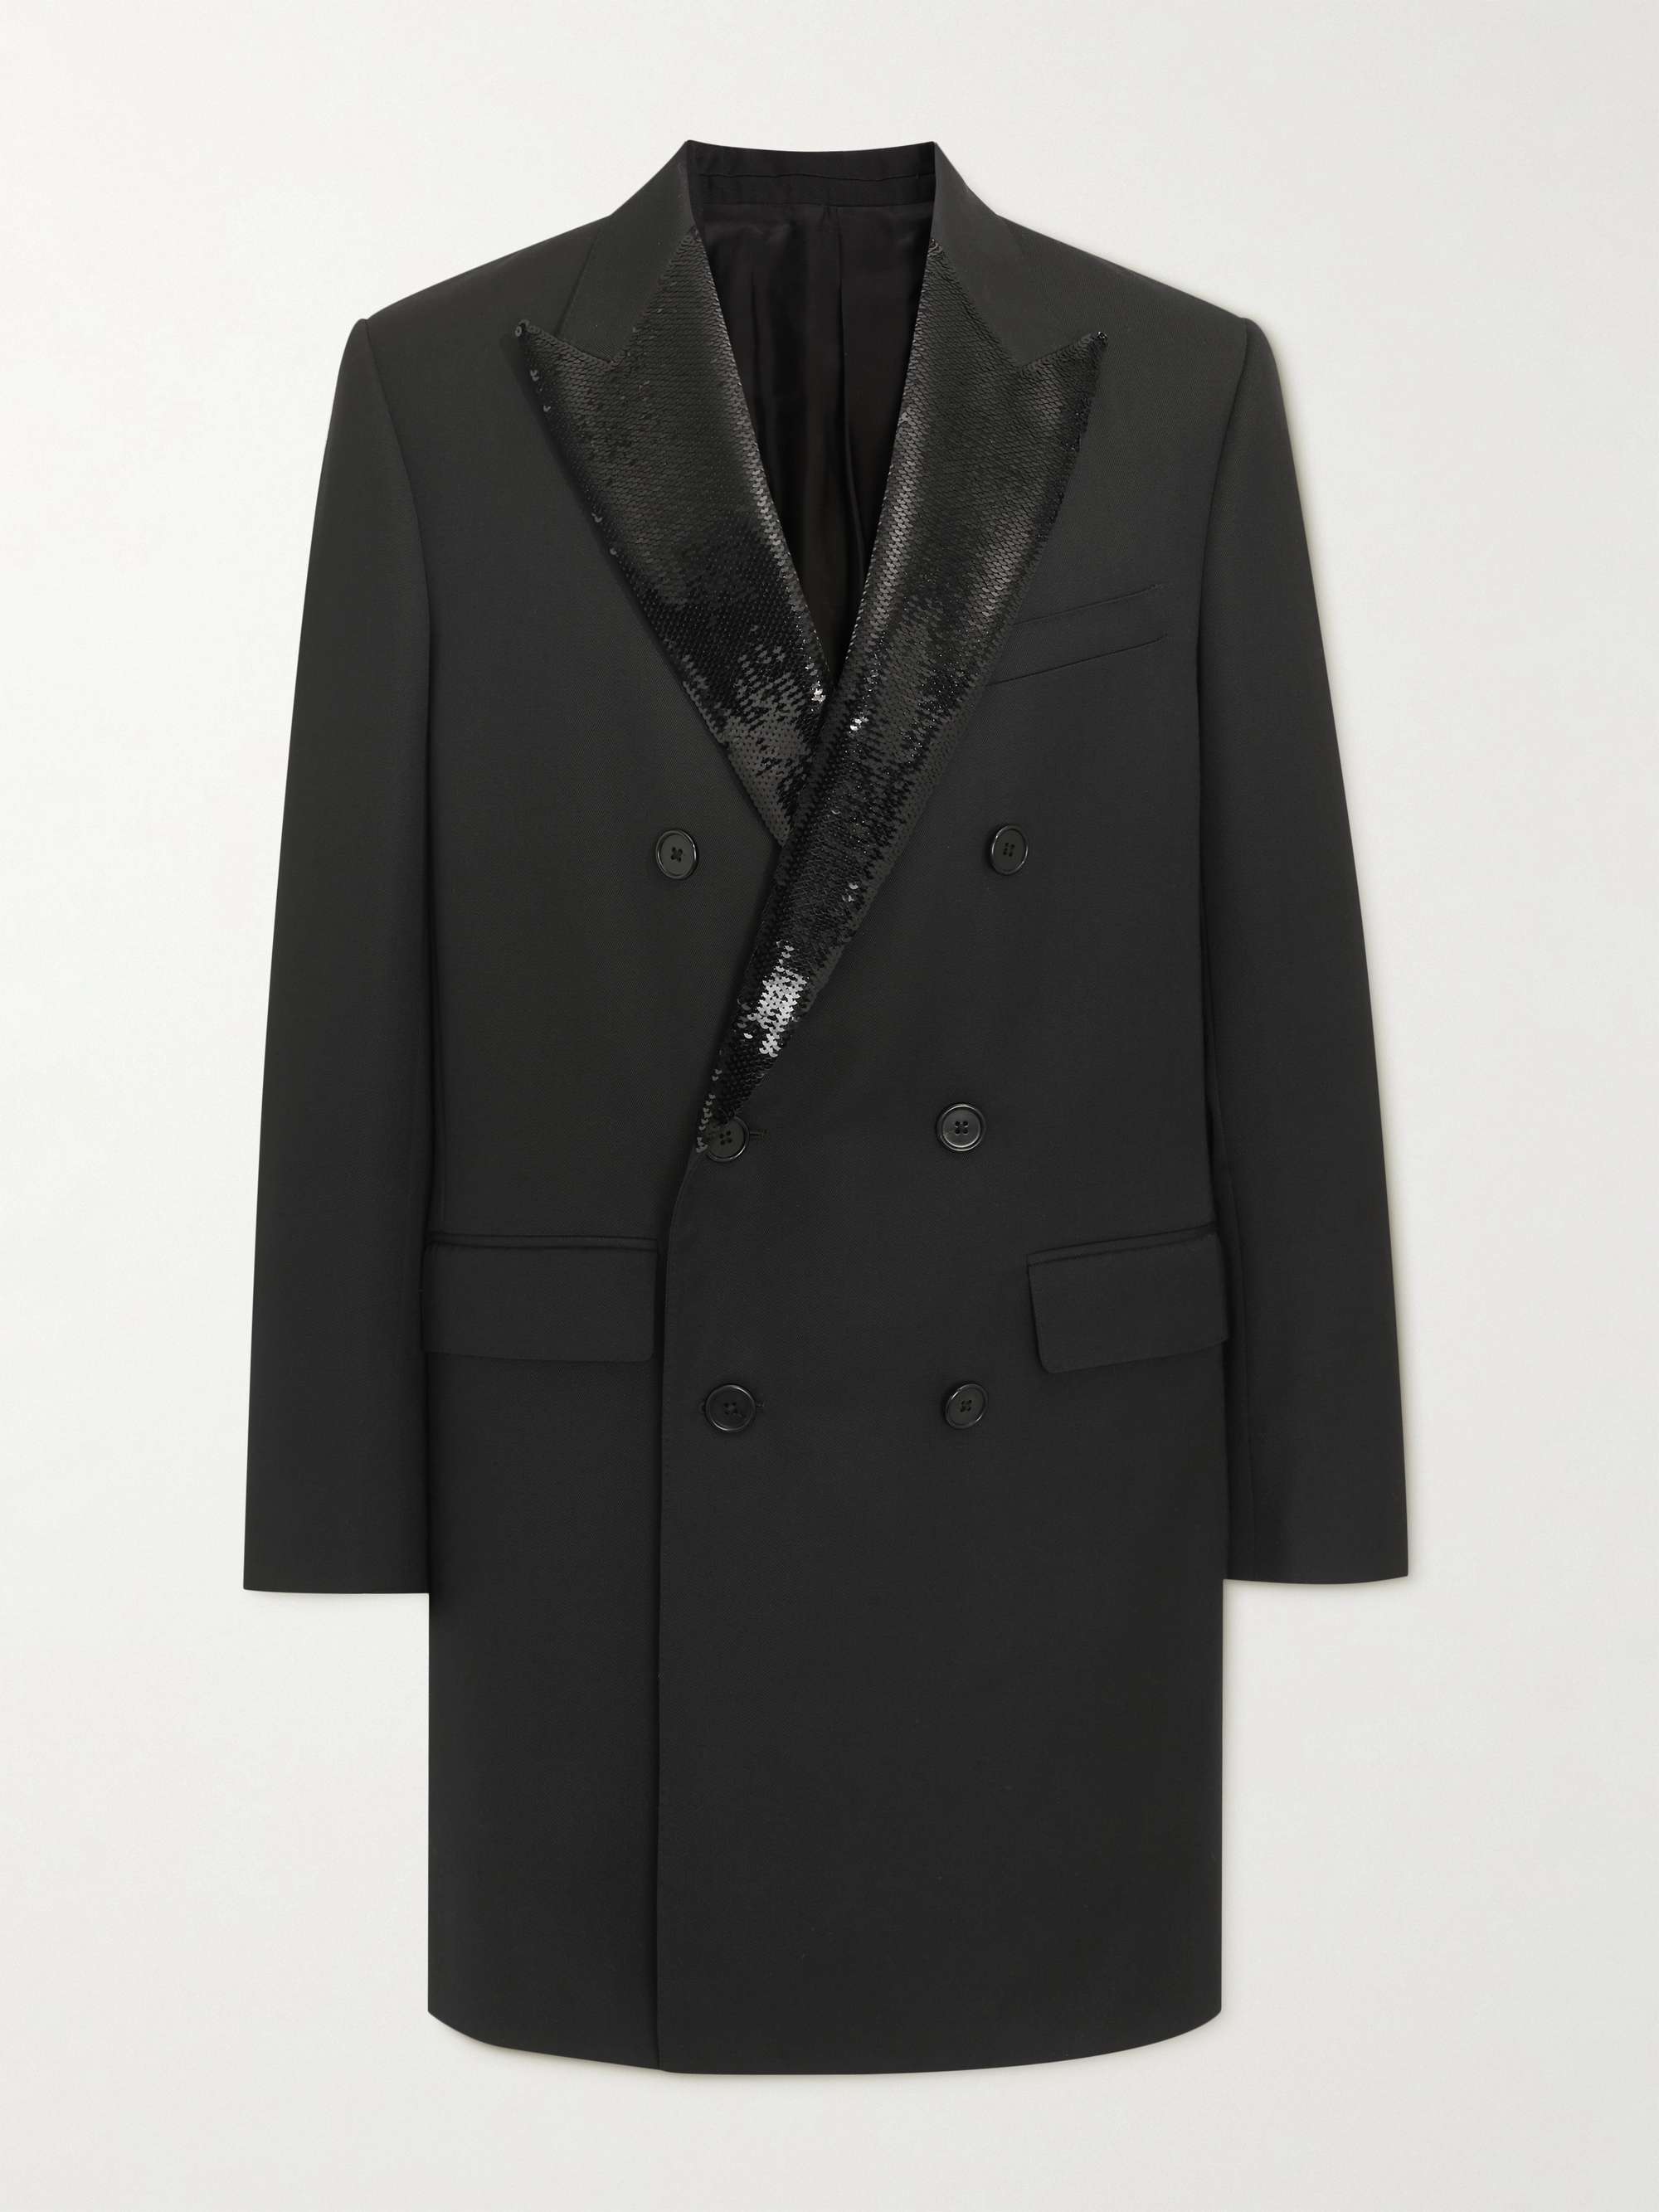 CELINE HOMME Sequin-Embellished Double-Breasted Wool Coat